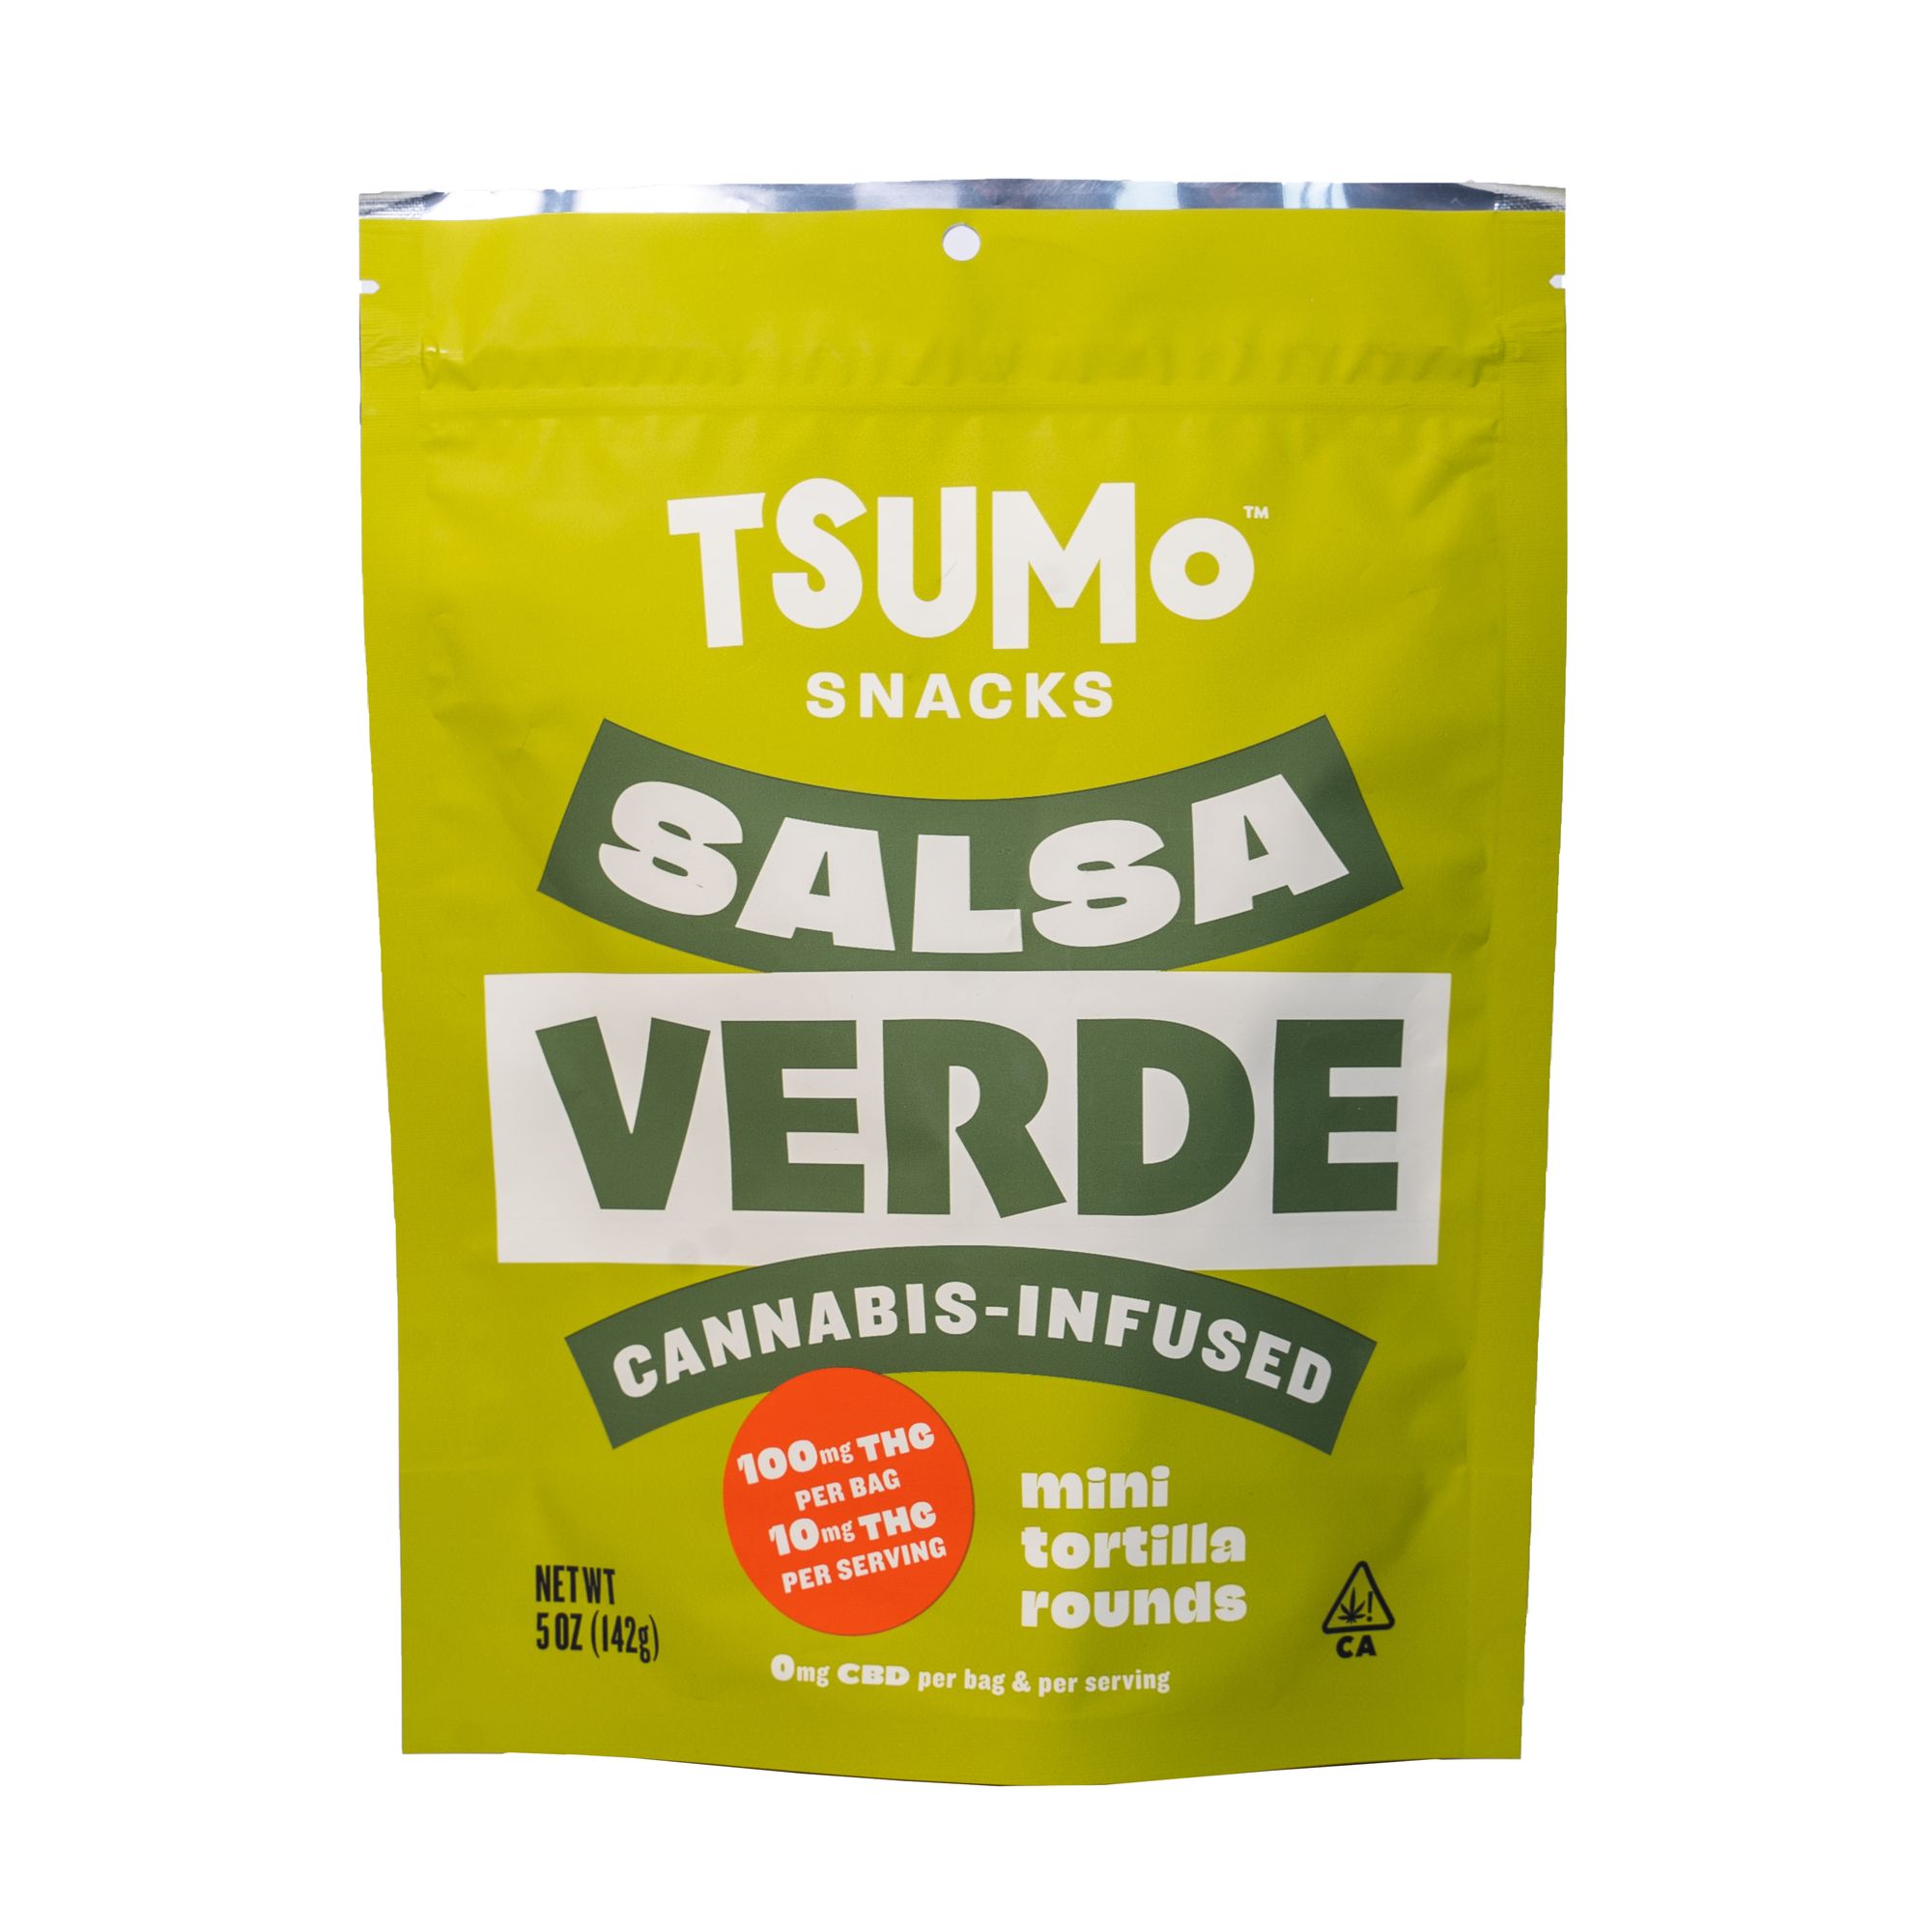 TSUMoSNACKS SALSA VERDE - Mini Tortilla Rounds - 100mg Multiserve